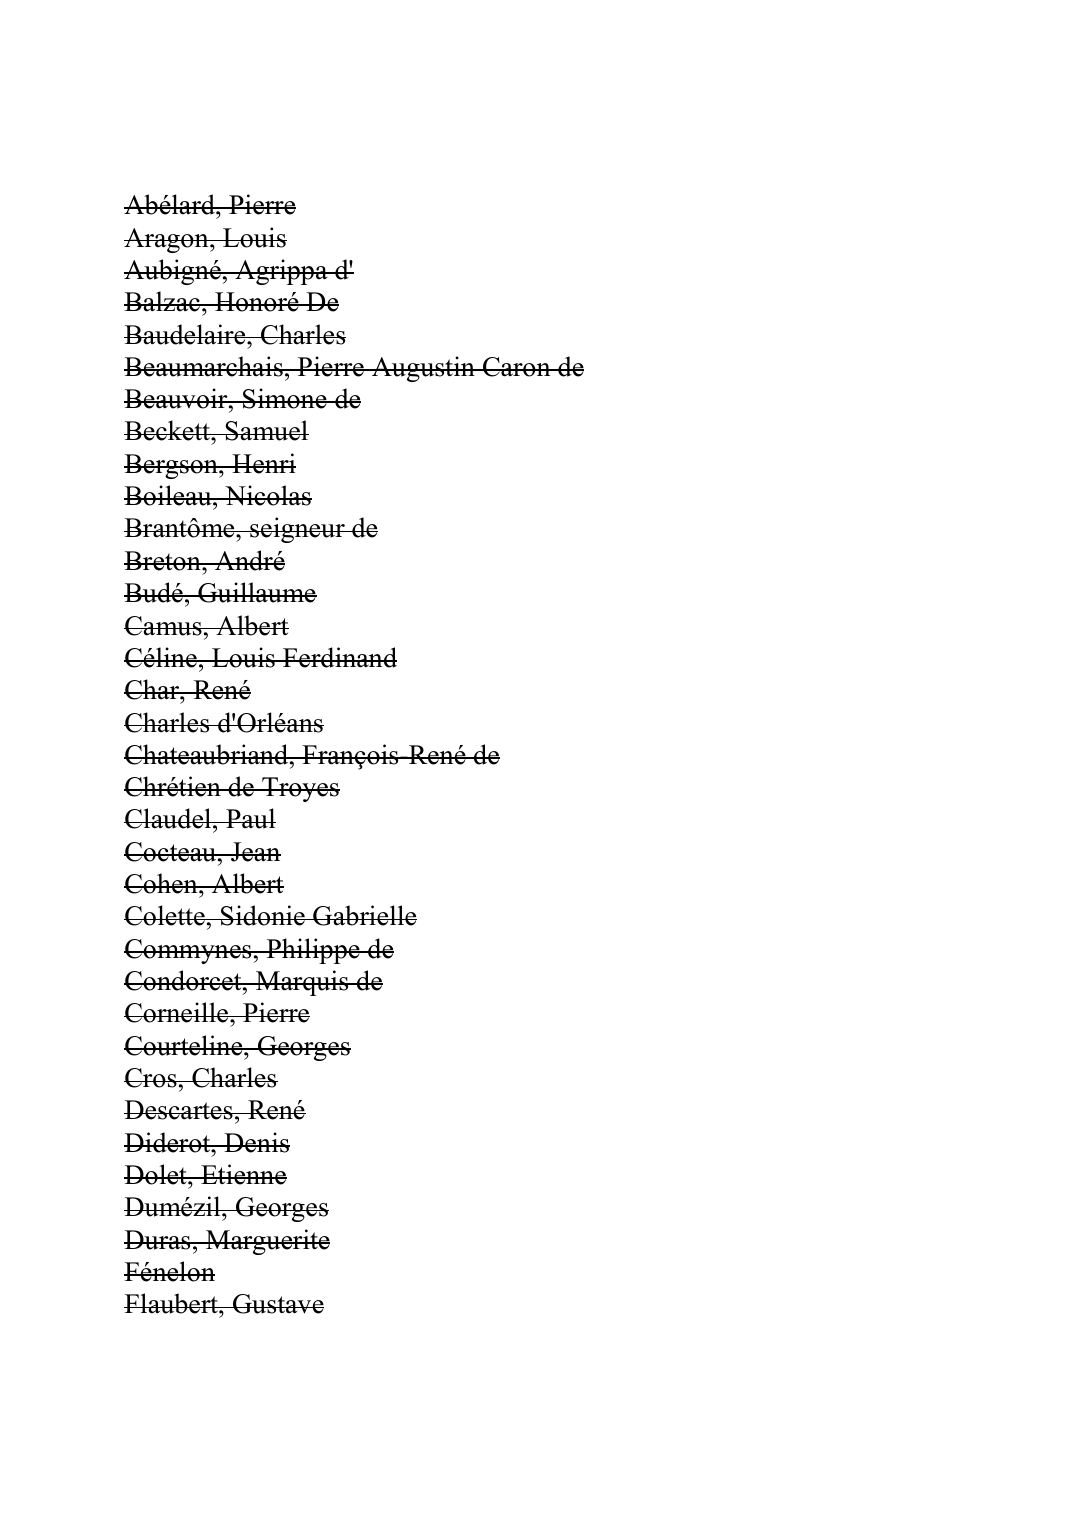 Prévisualisation du document Abélard, PierreAragon, LouisAubigné, Agrippa d'Balzac, Honoré DeBaudelaire, CharlesBeaumarchais, Pierre Augustin